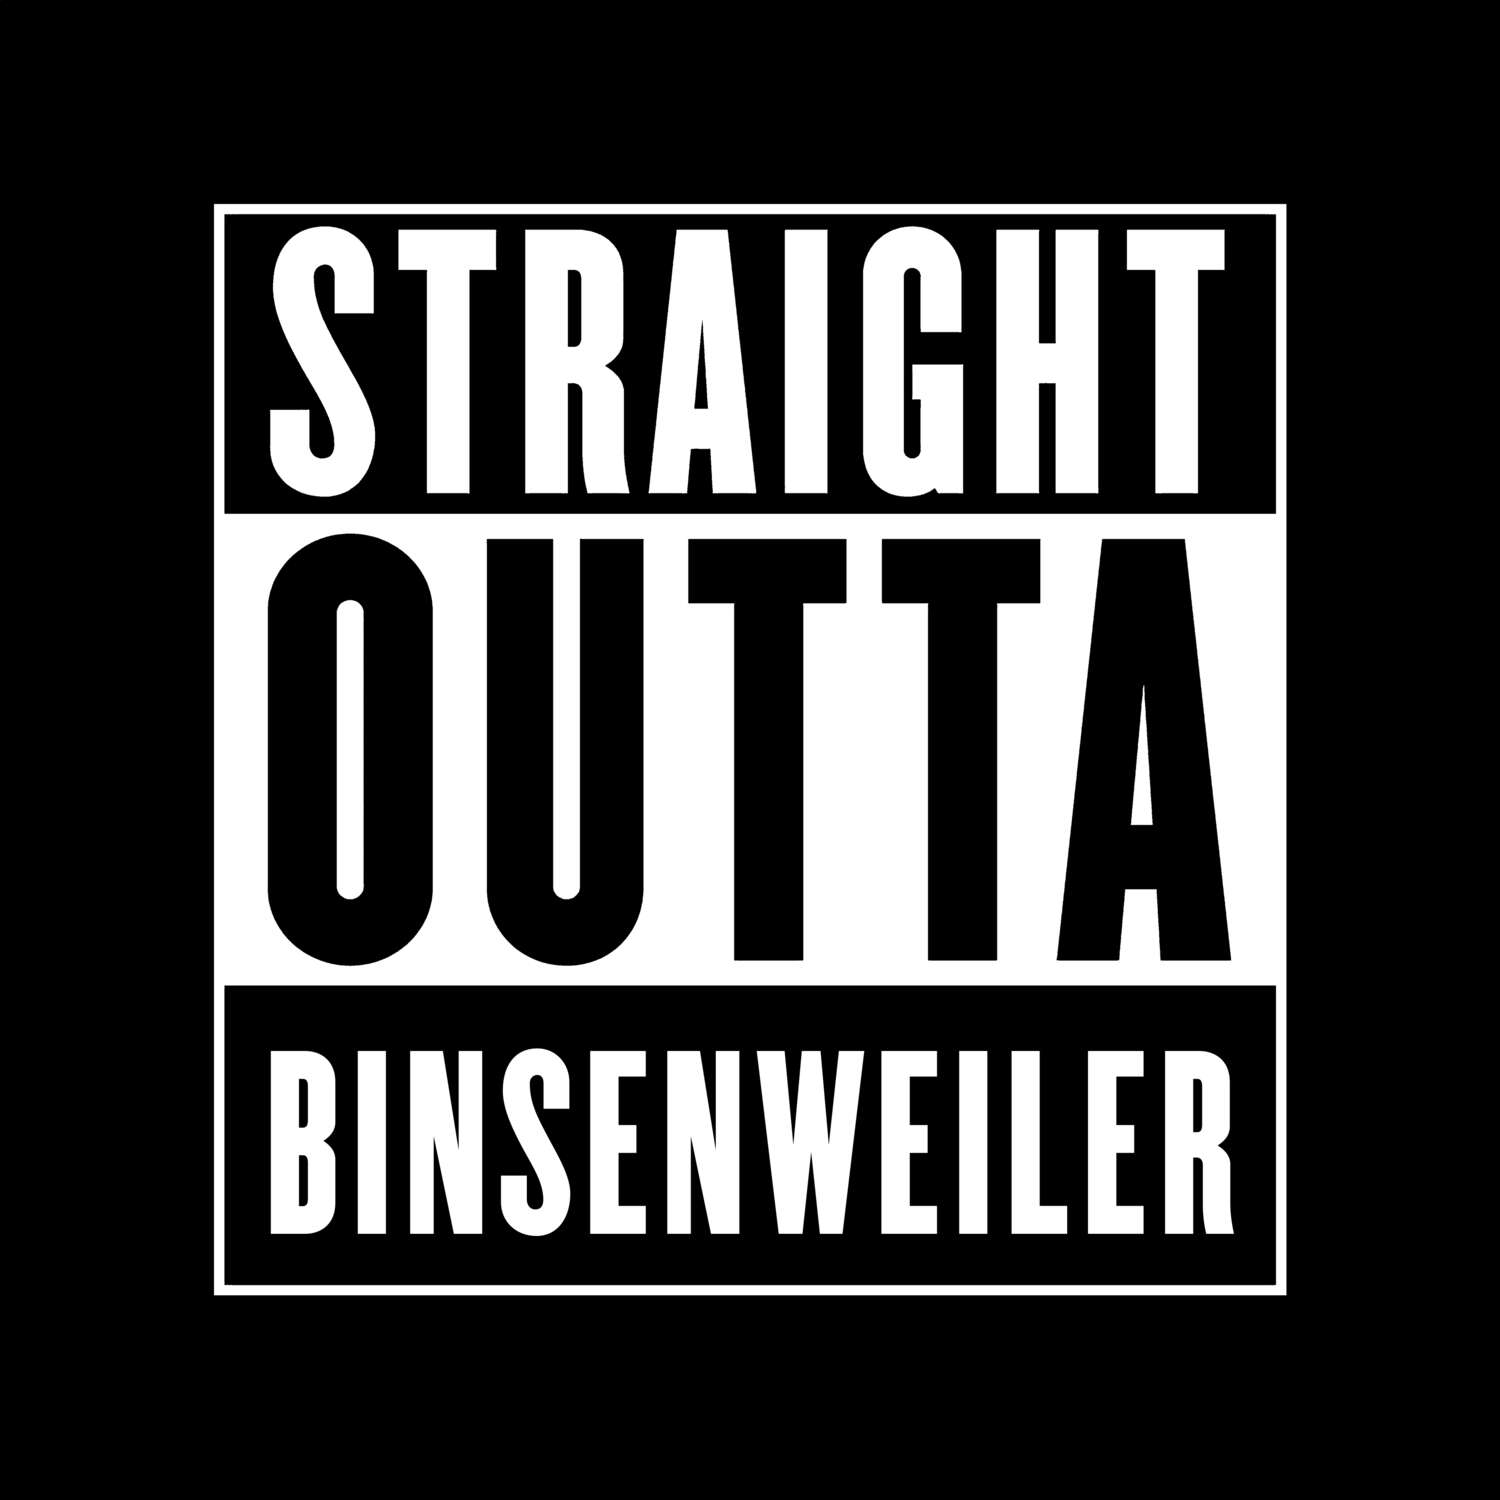 Binsenweiler T-Shirt »Straight Outta«